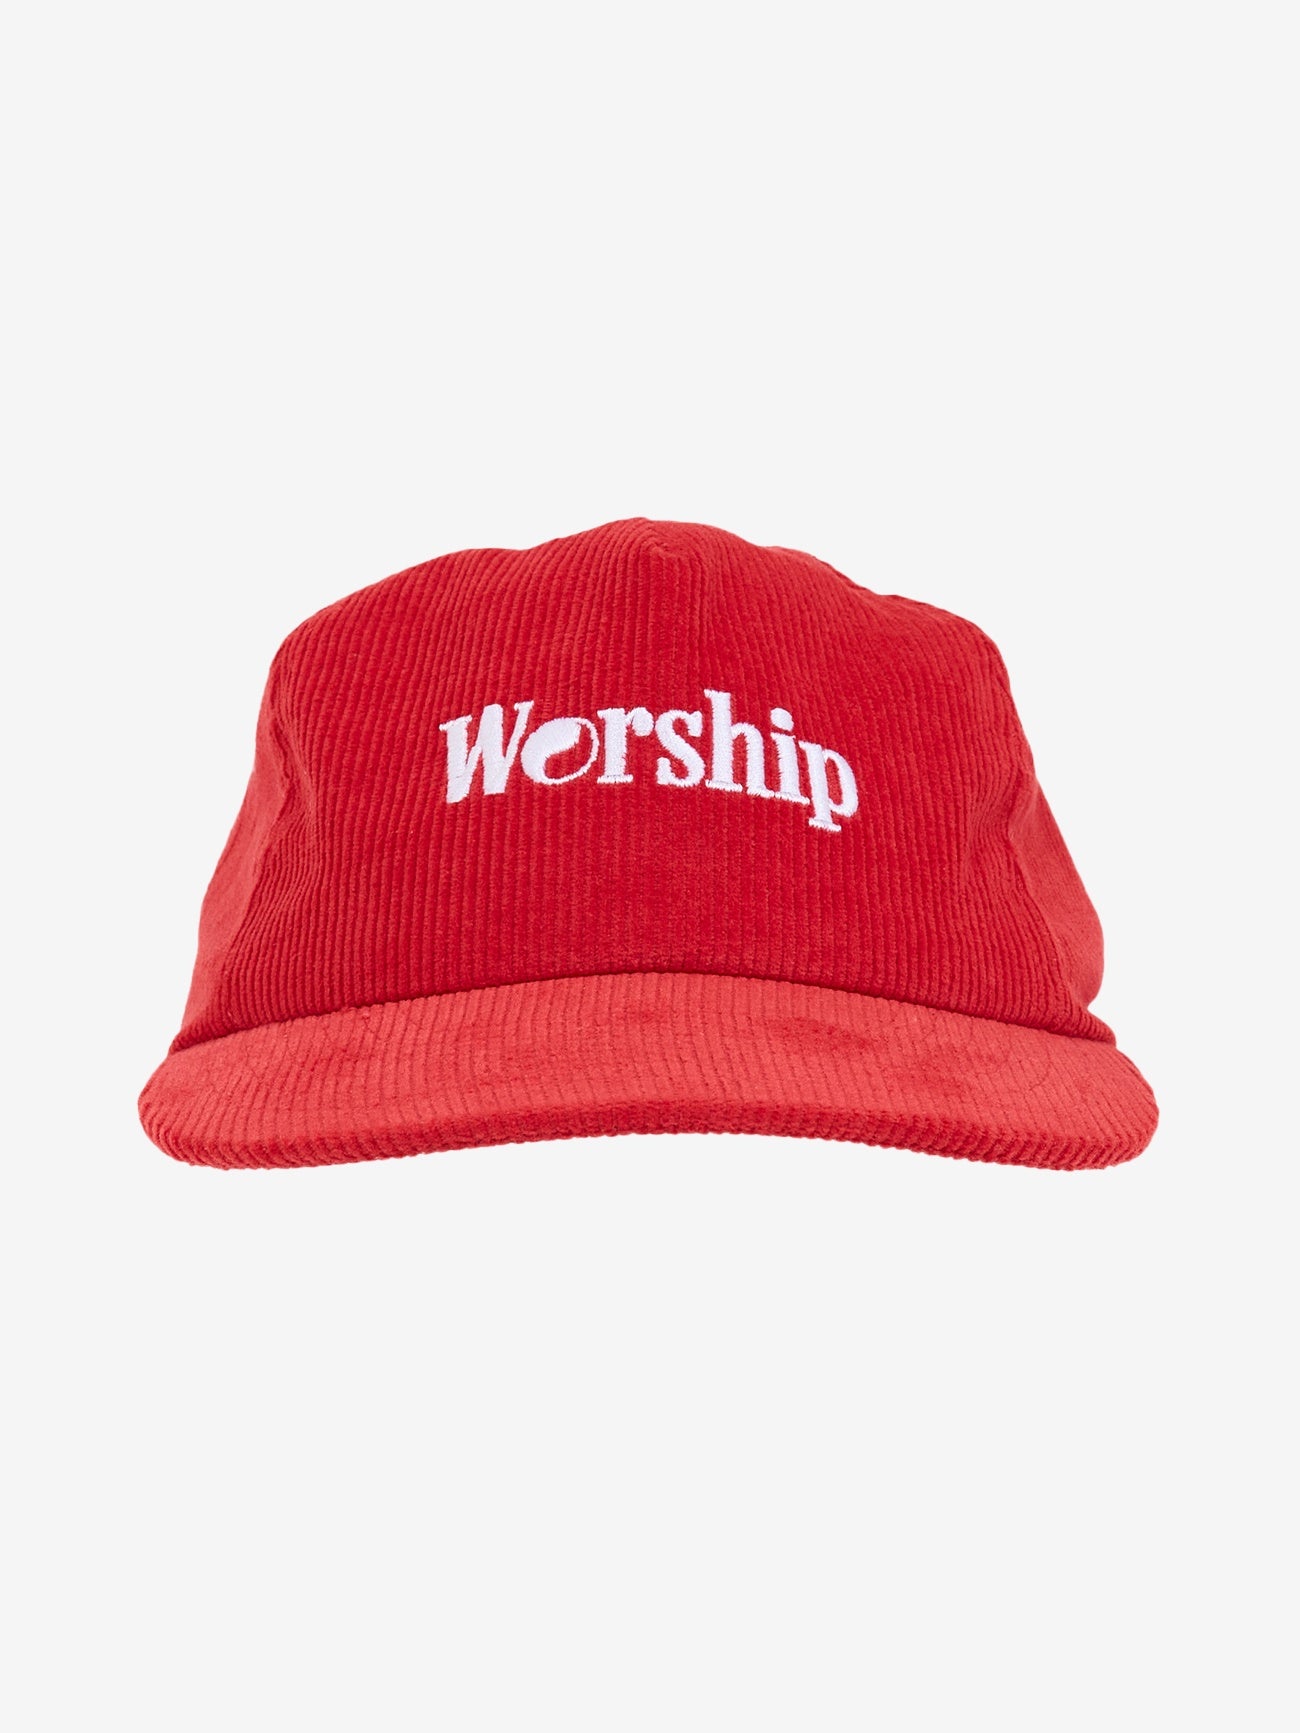 WORSHIP Smoko hat - Fiery red